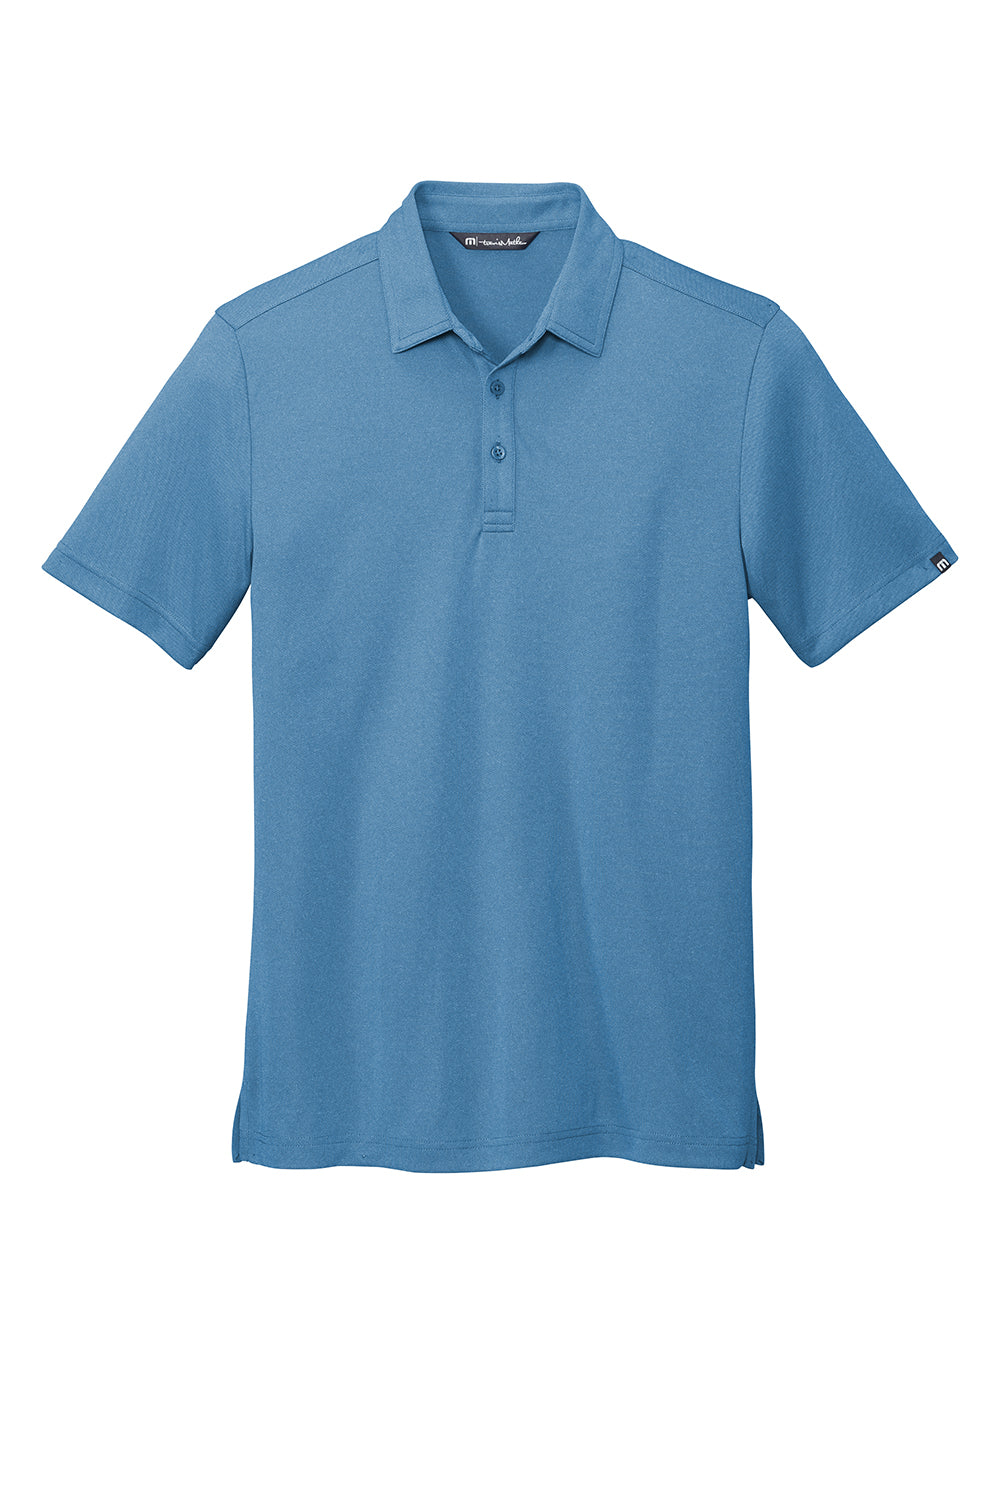 TravisMathew TM1MU410 Mens Coto Performance Moisture Wicking Short Sleeve Polo Shirt Federal Blue Flat Front